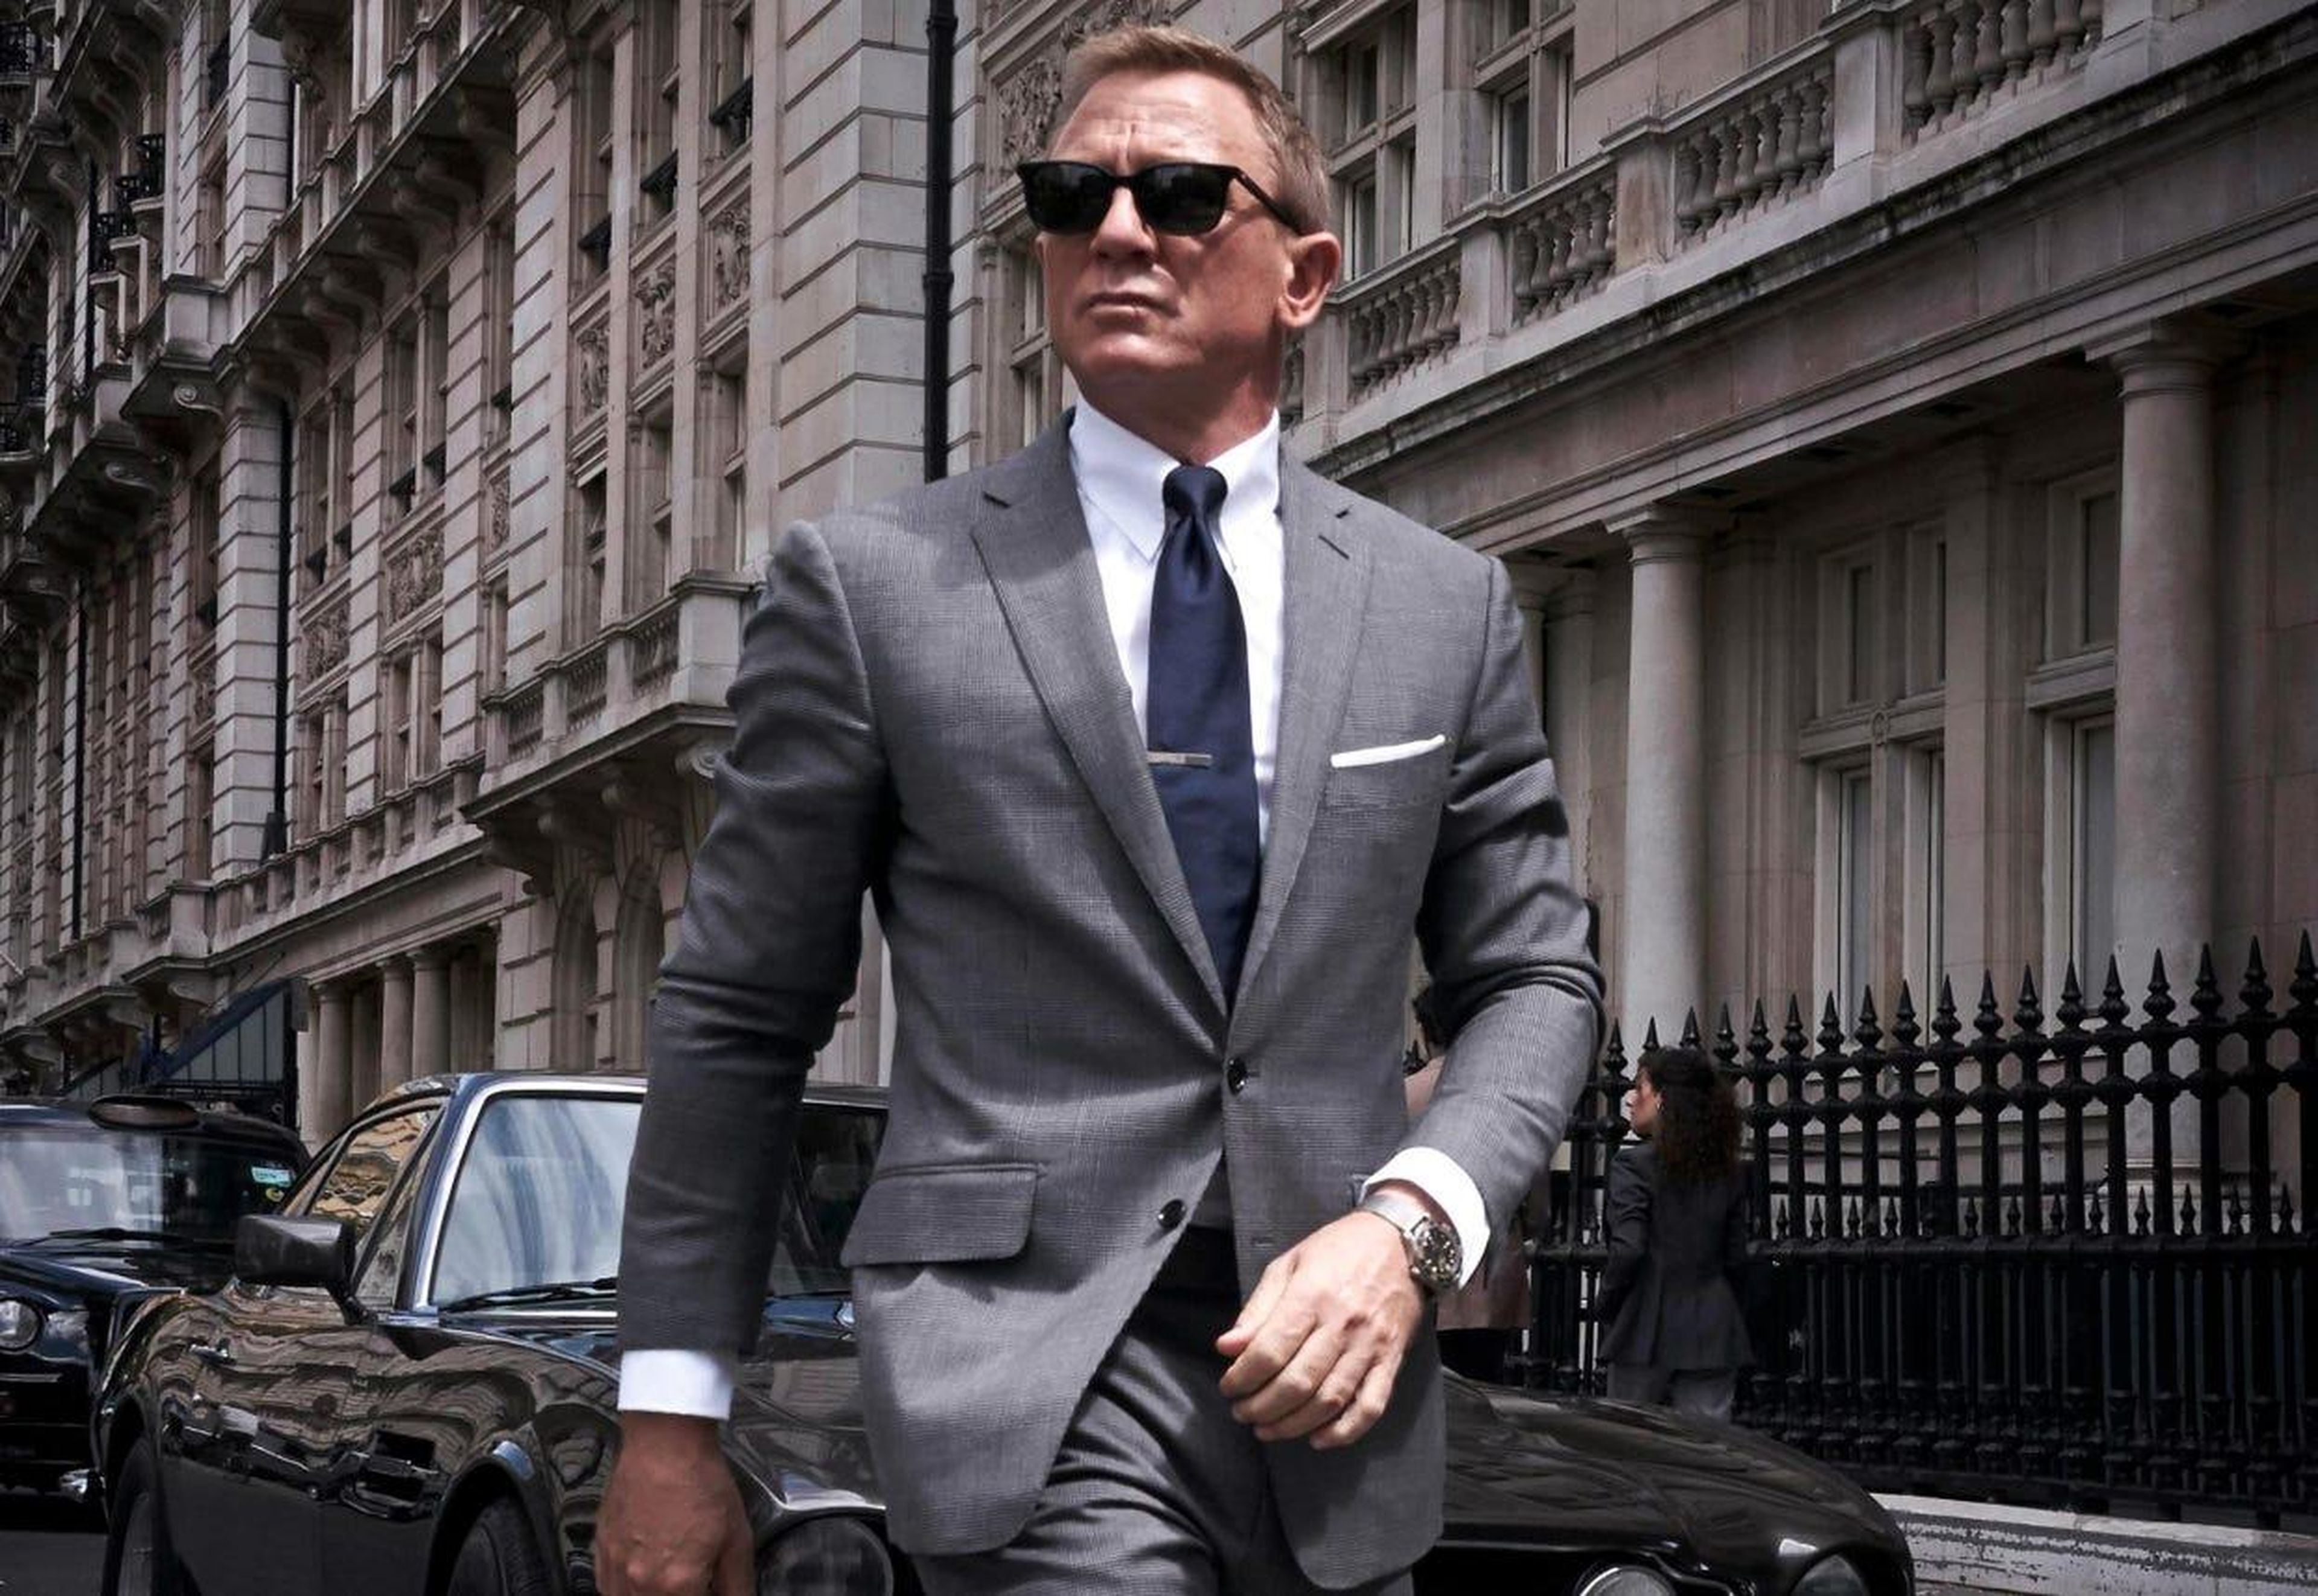 Daniel Craig as James Bond in "No Time to Die"